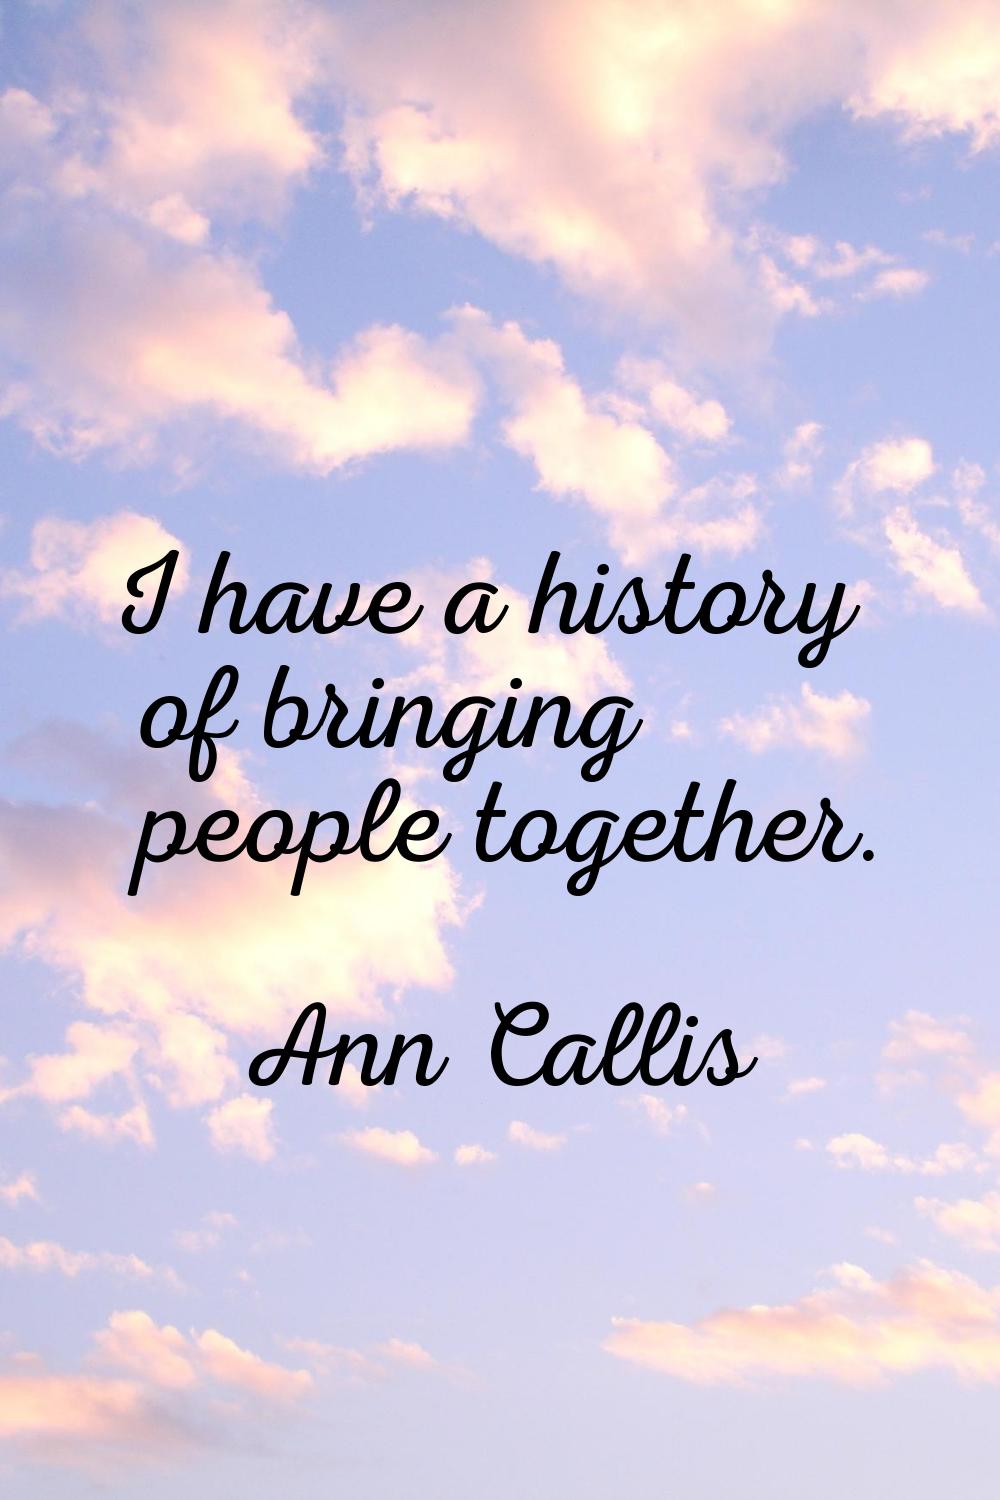 I have a history of bringing people together.